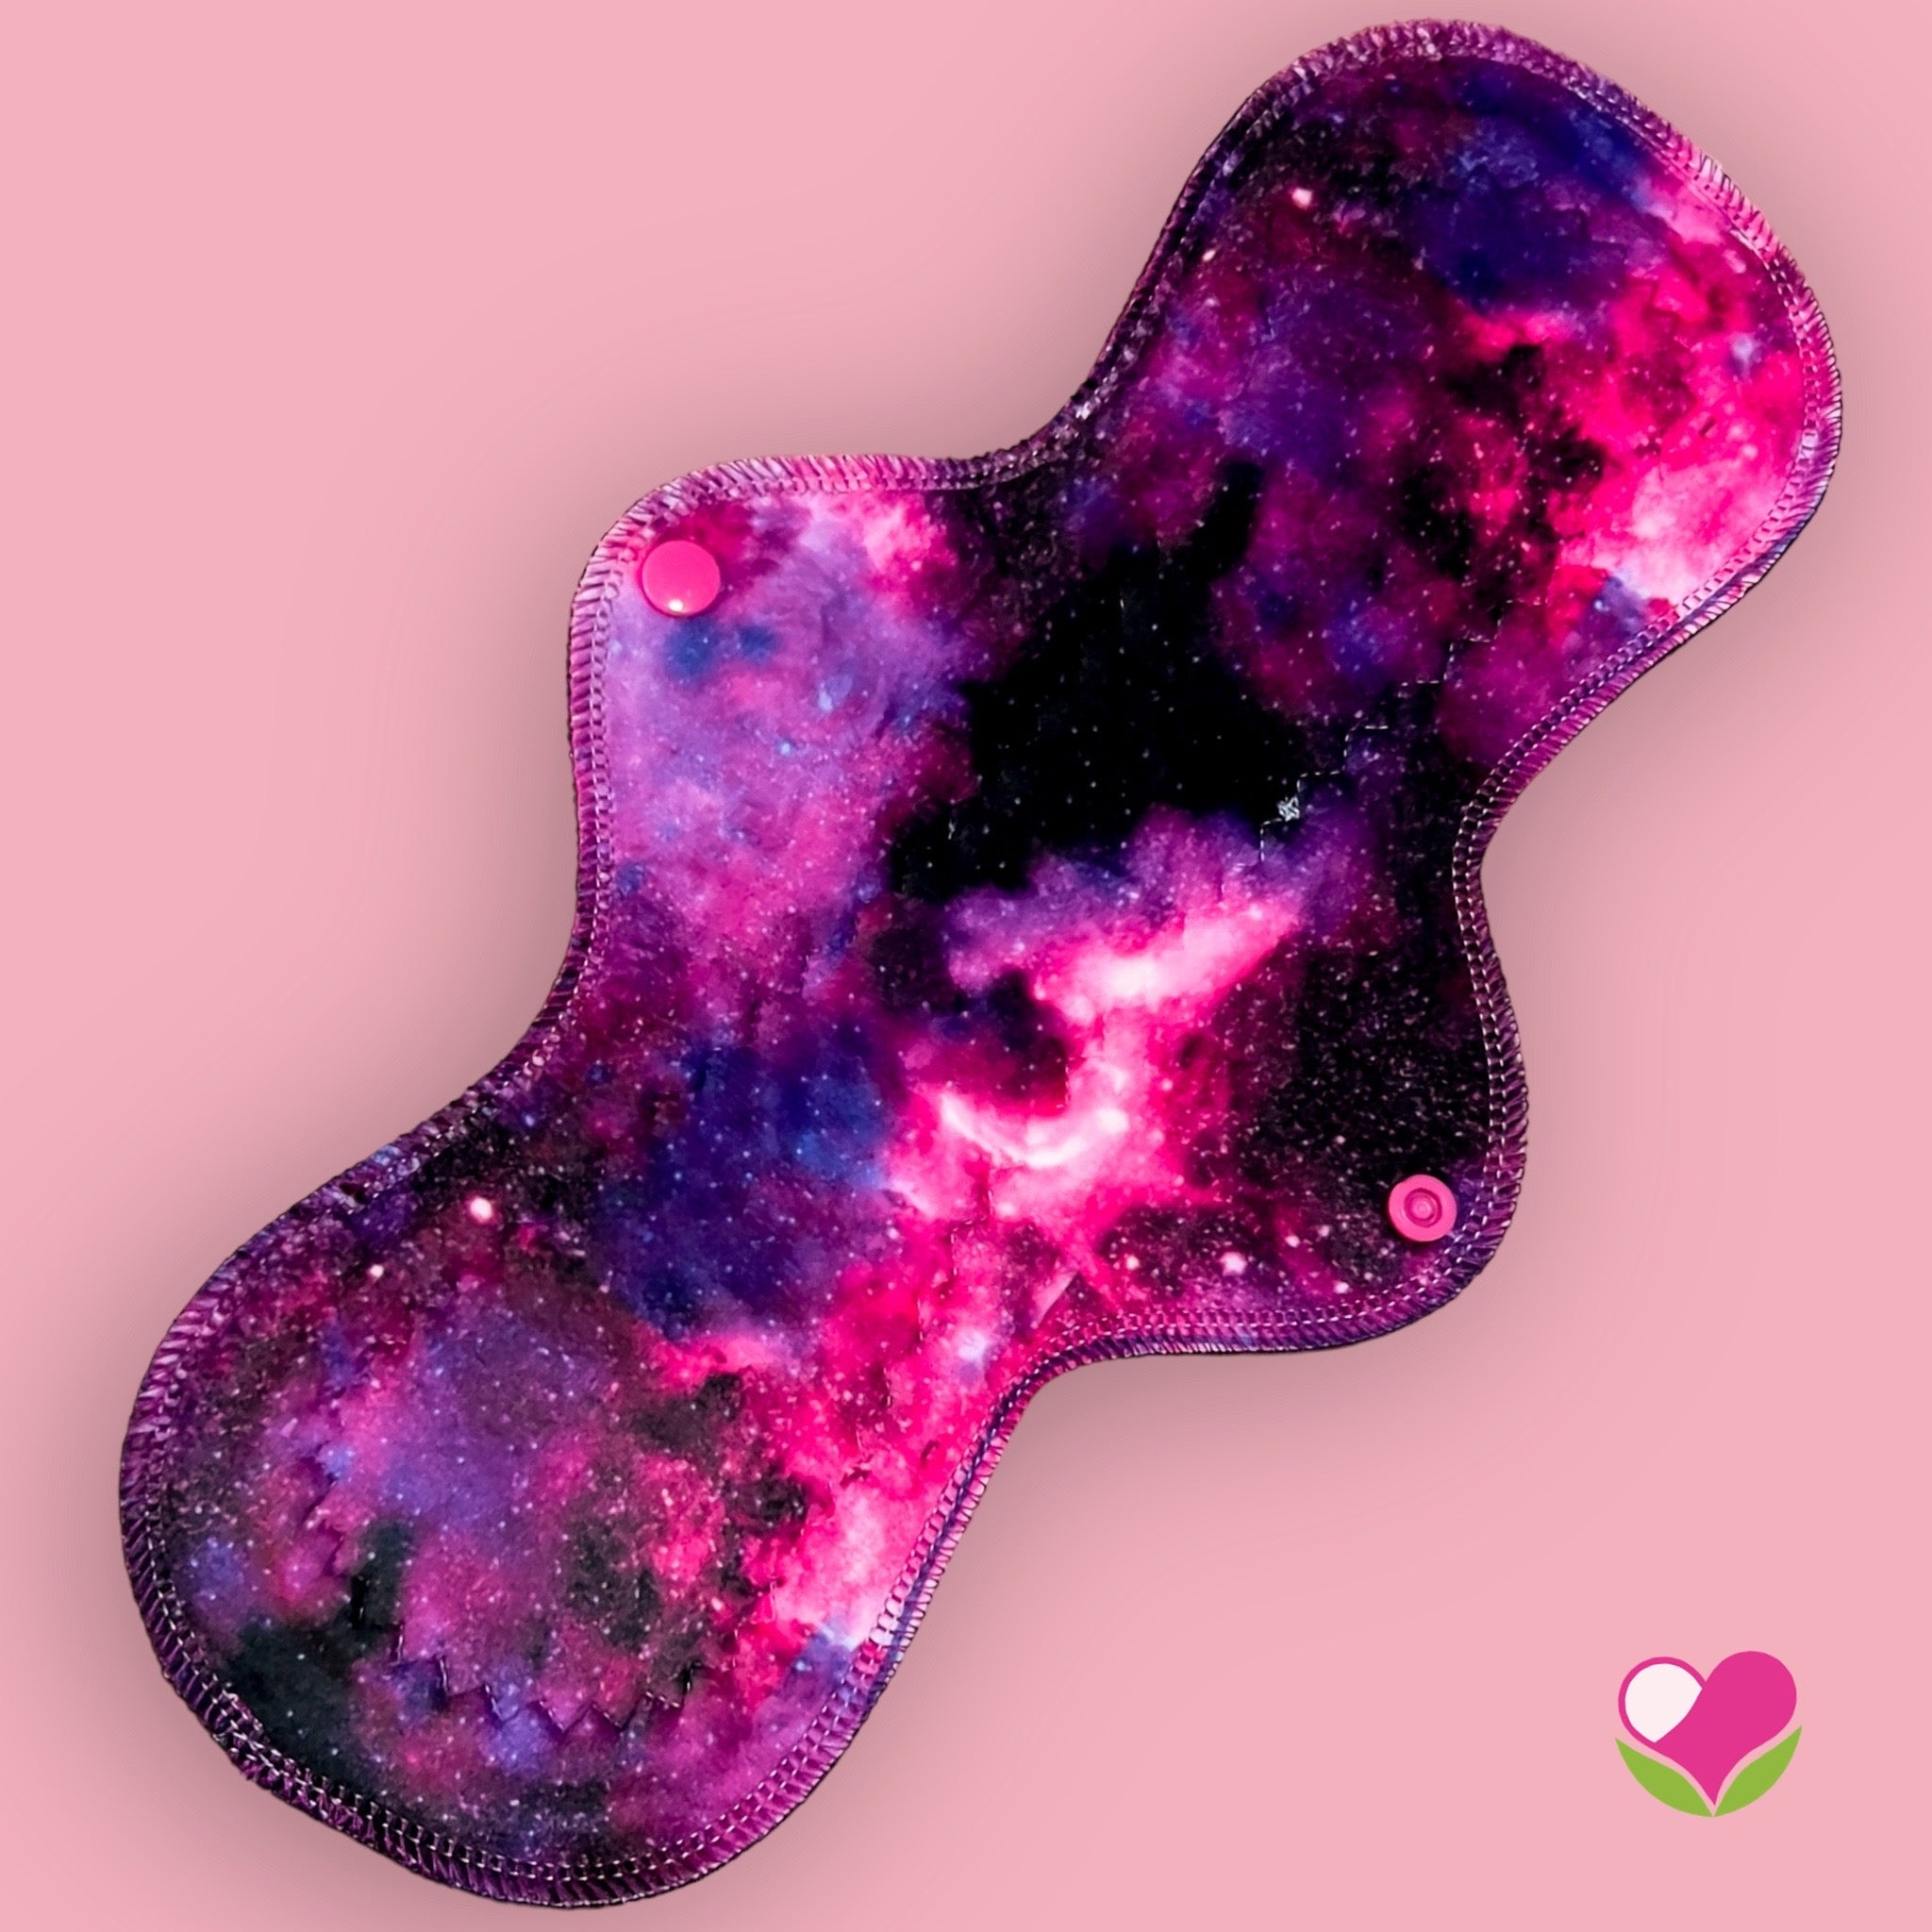 Nocturna galaxias fiusha minky 36 cms